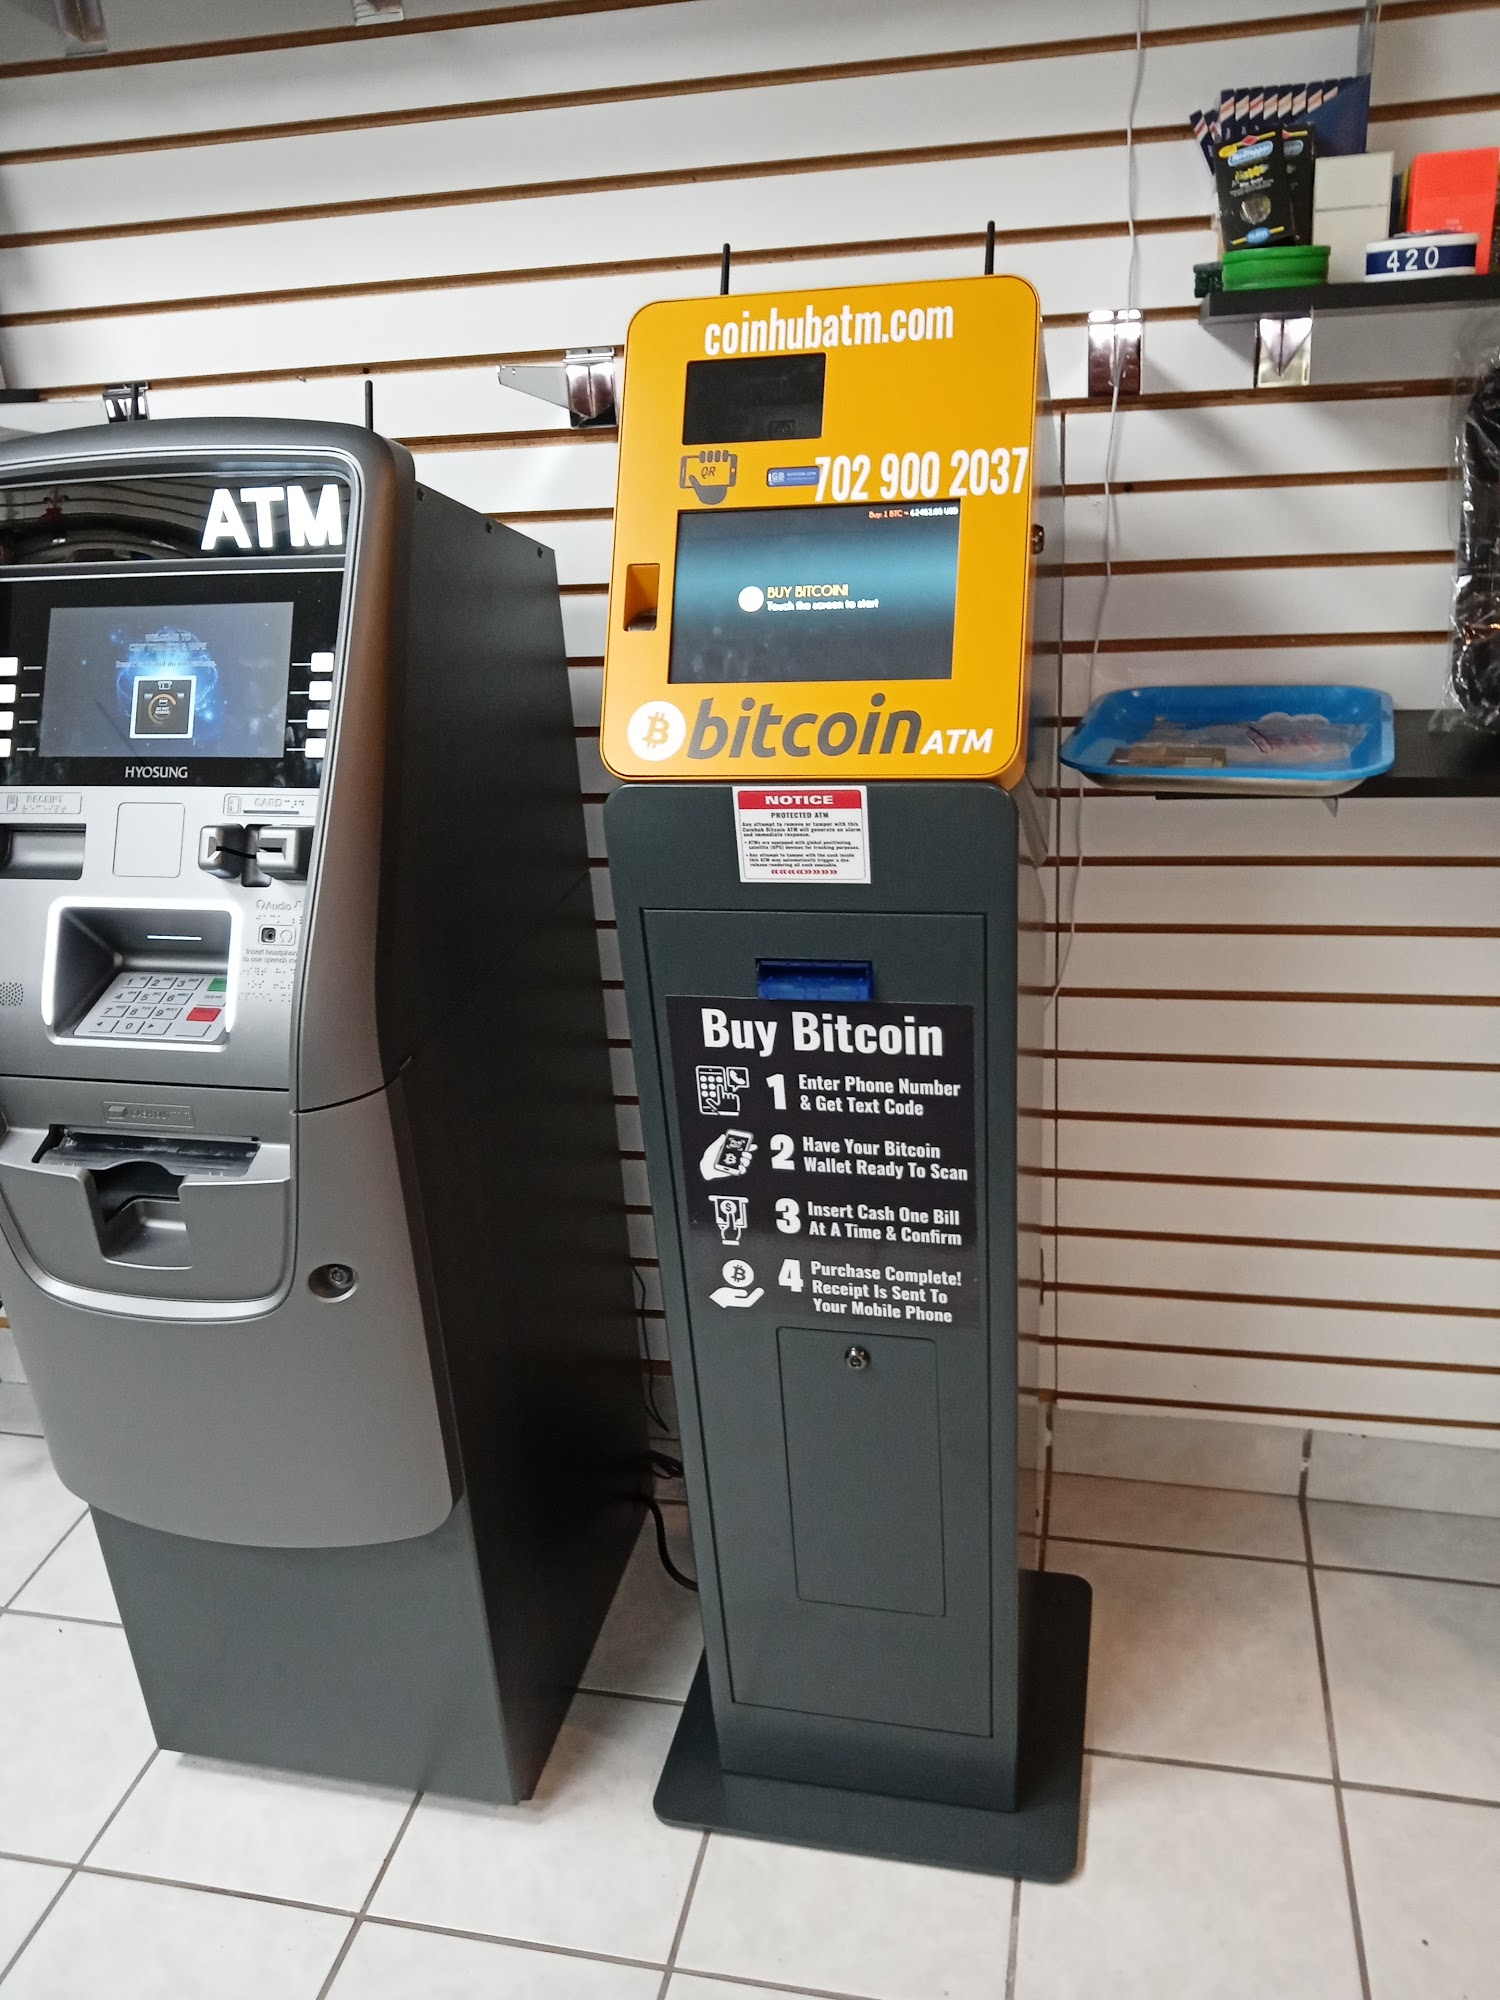 Bitcoin ATM Des Plaines - Coinhub